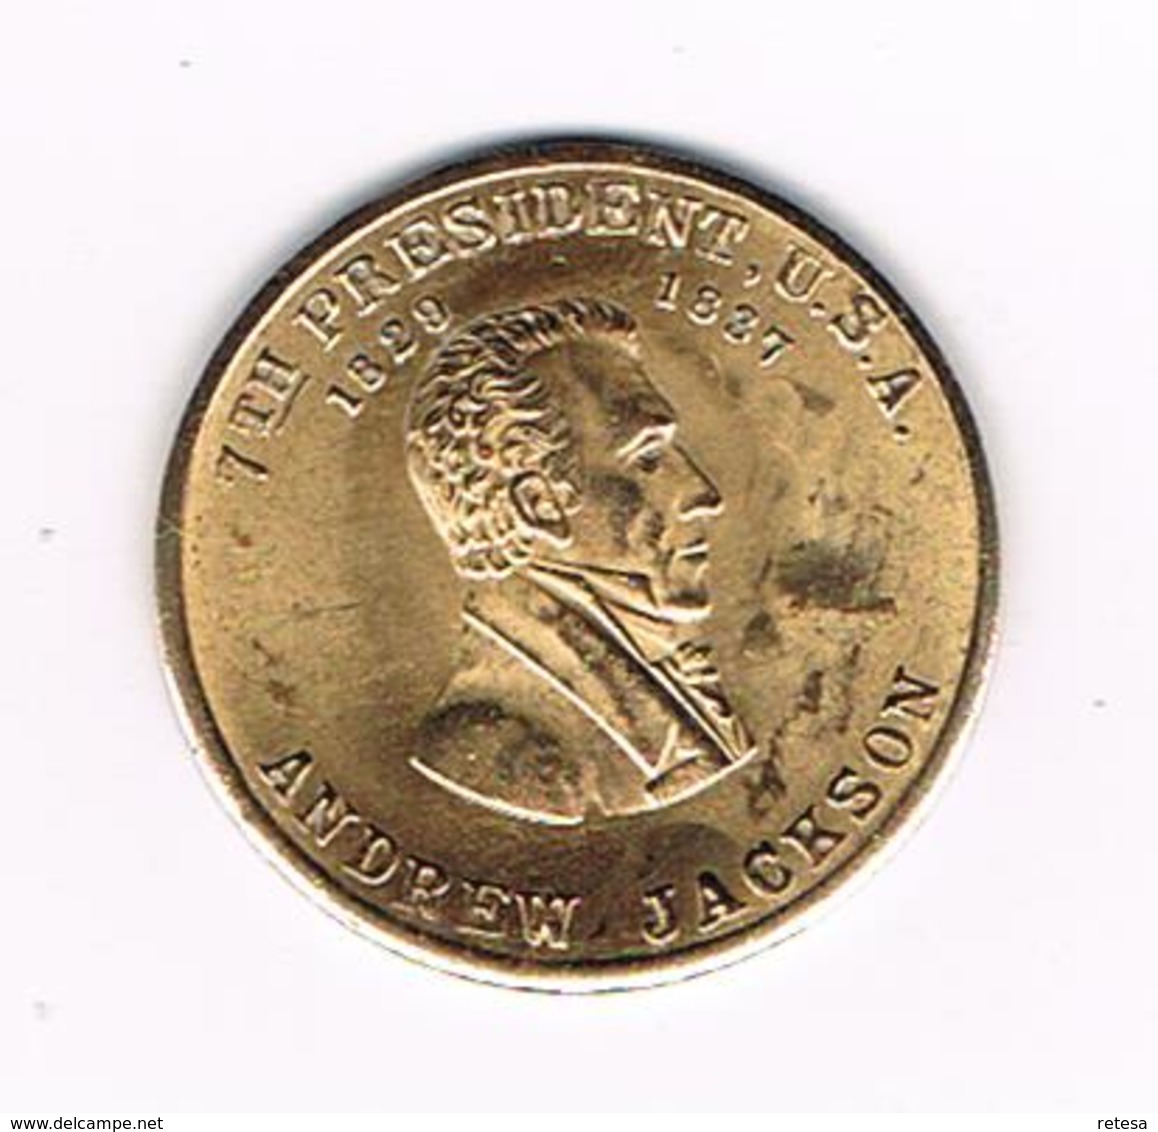 &- PENNING  ANDREW  JACKSON  7 TH  PRESIDENT  U.S.A. - Pièces écrasées (Elongated Coins)